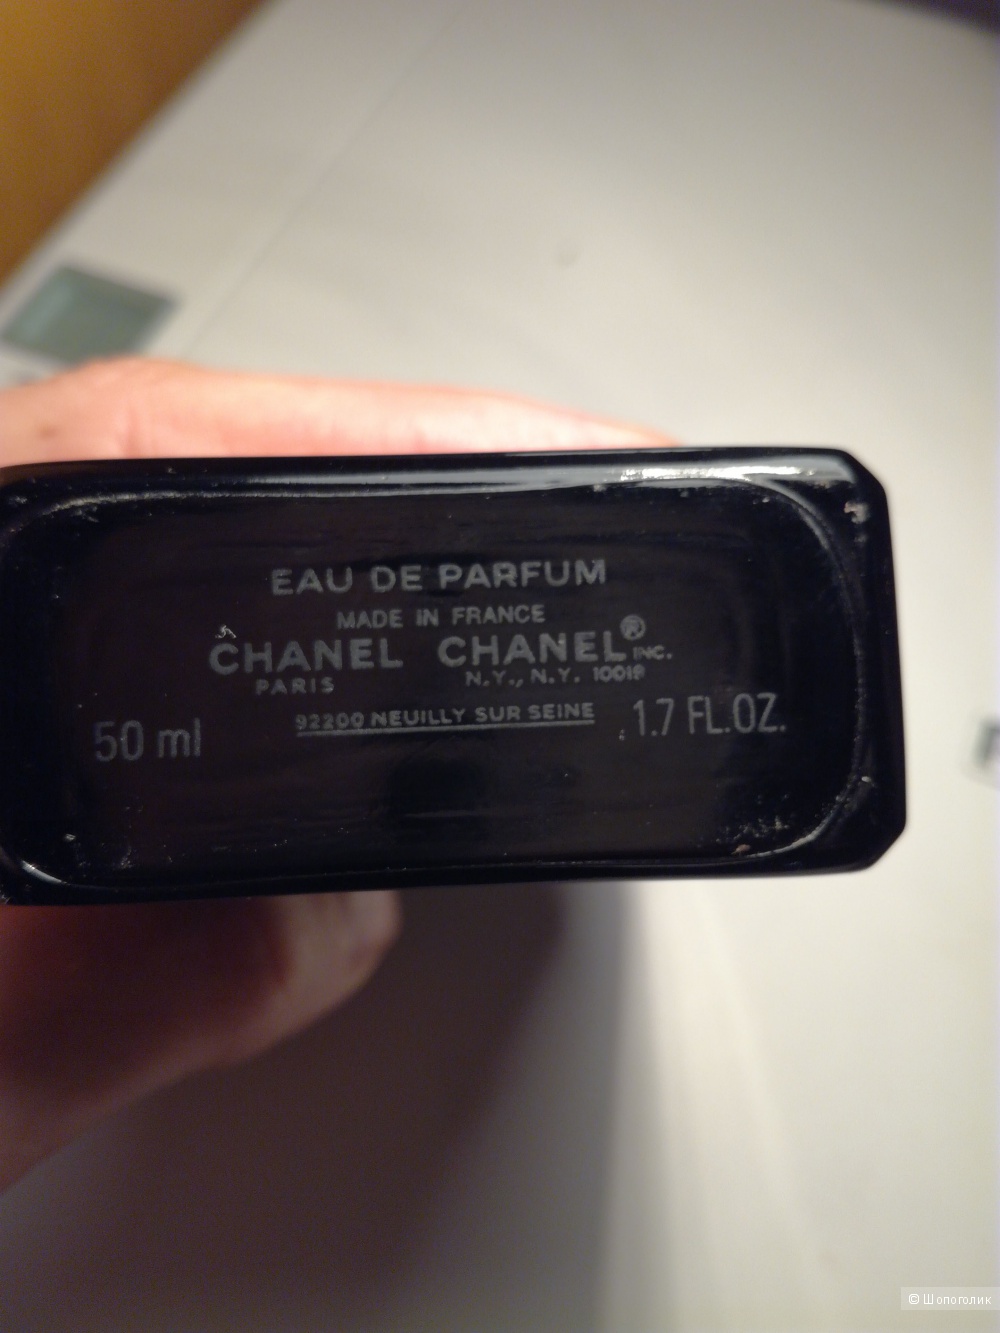 Coco Noir Chanel парфюмерная вода.